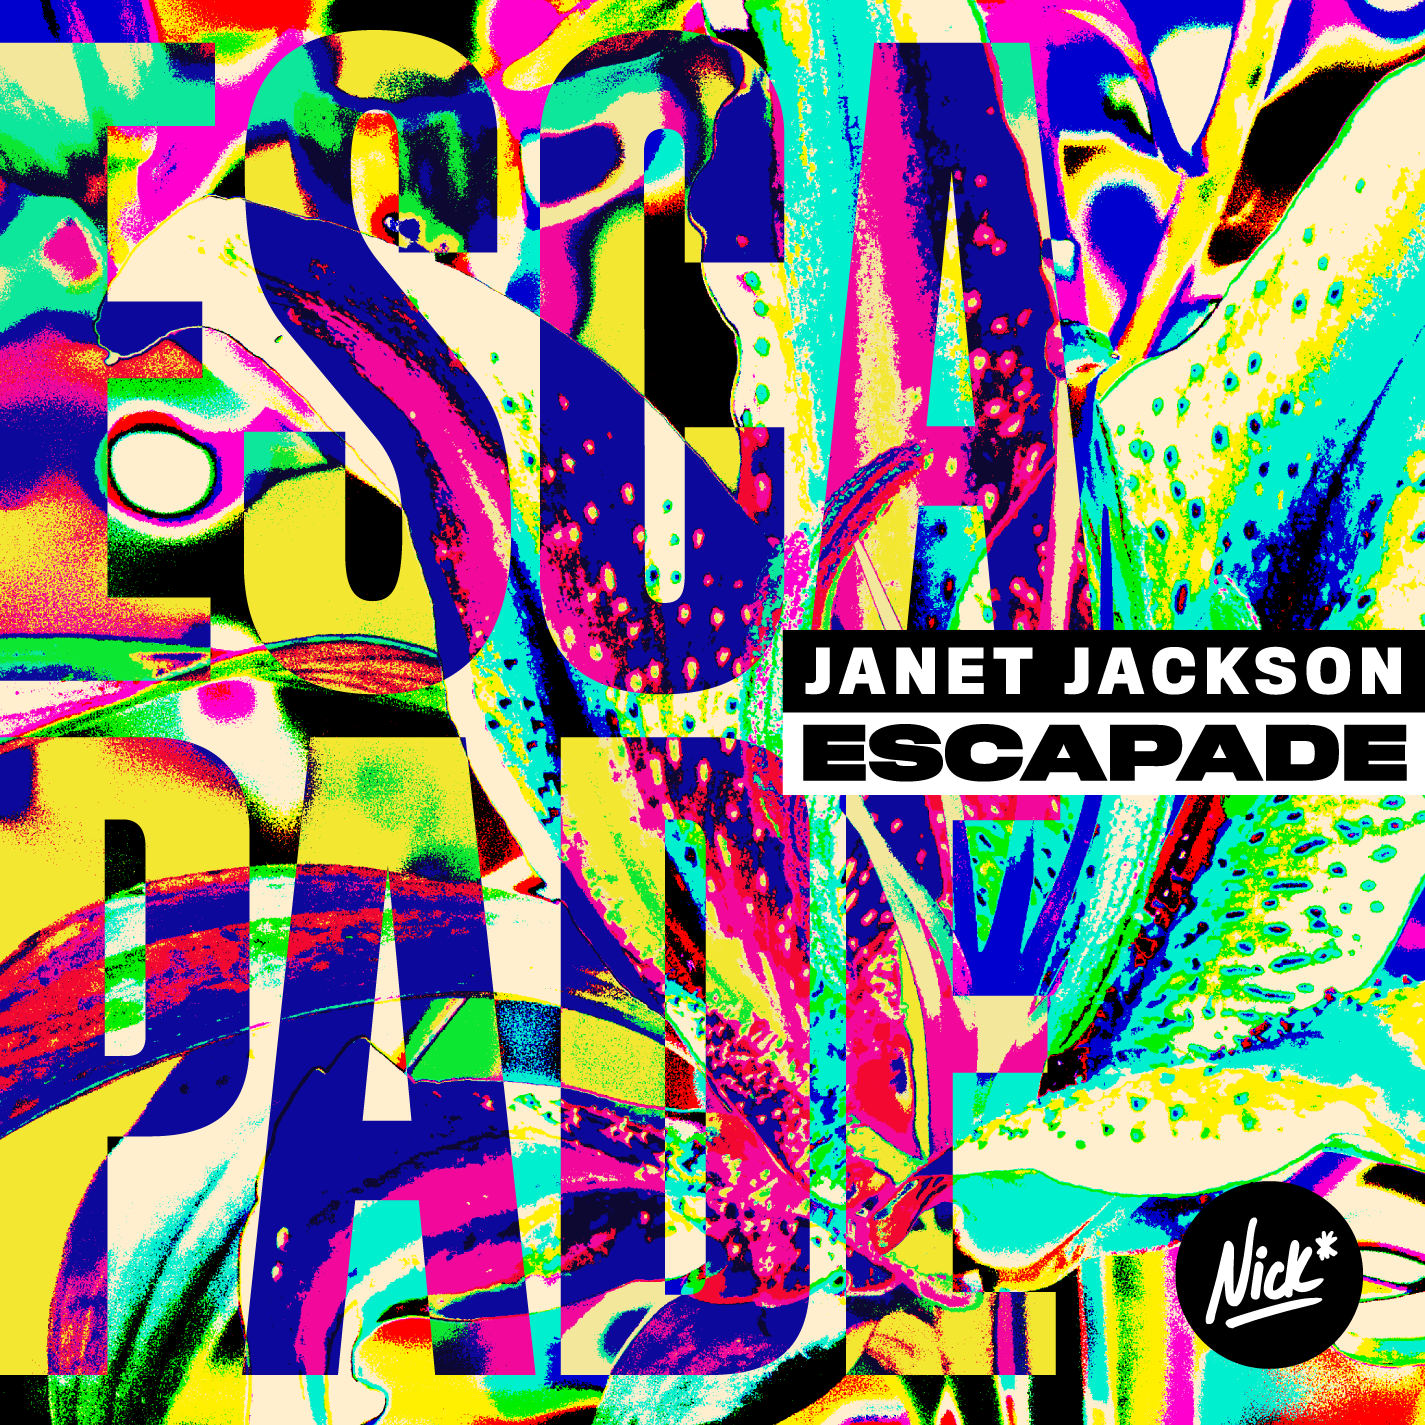 Janet Jackson - Escapade Nick* Pacific Paradise Mix